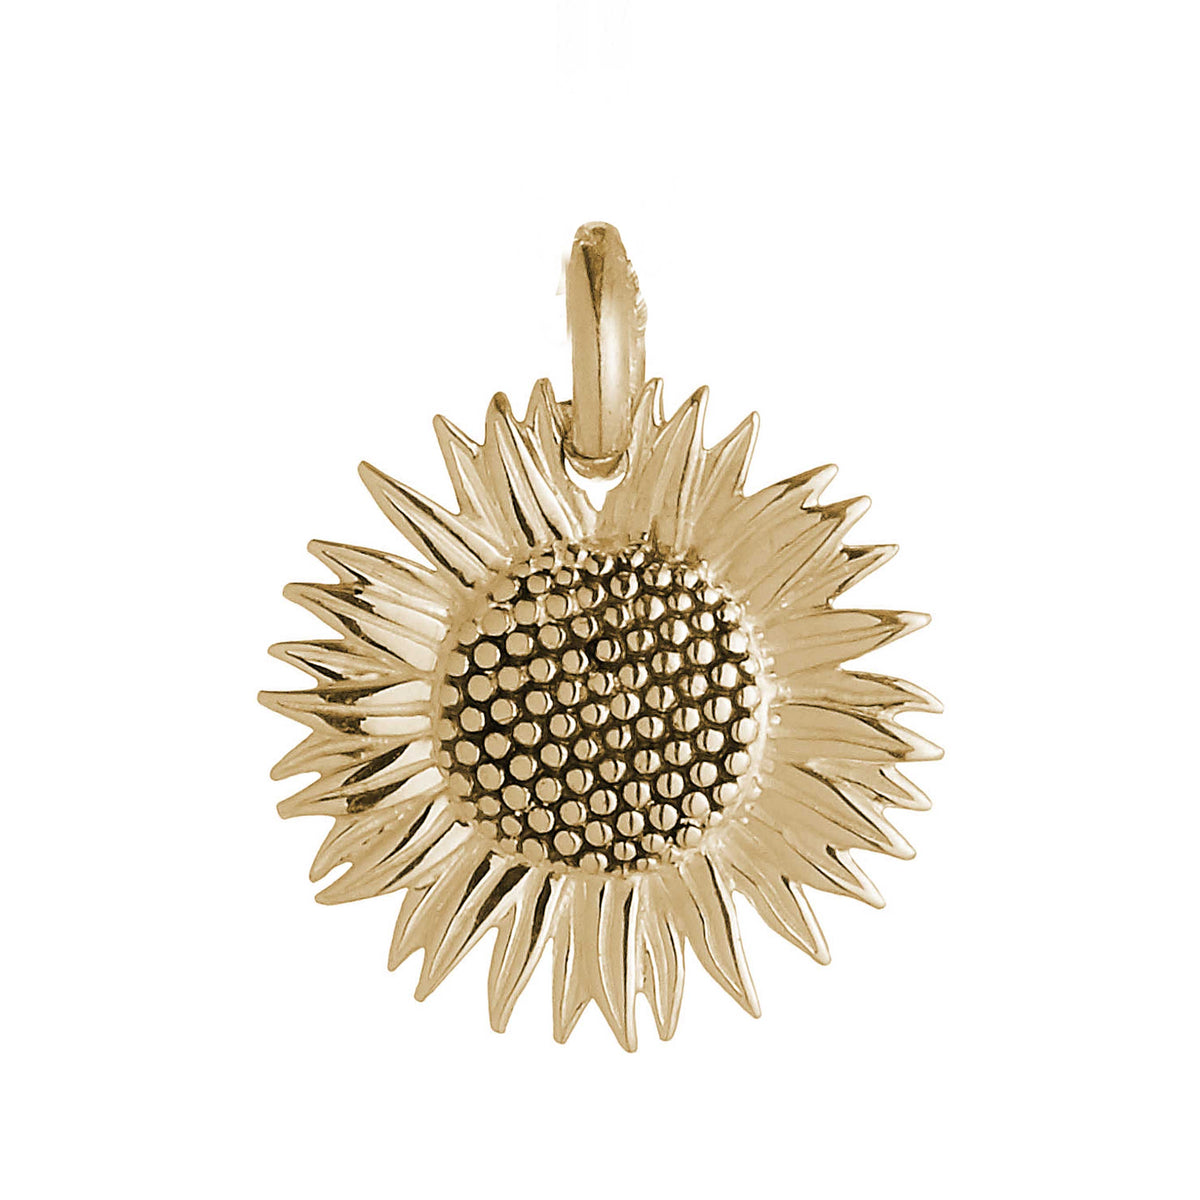 solid gold sunflower bracelet necklace charm 9 carat made in UK scarlett jewellery